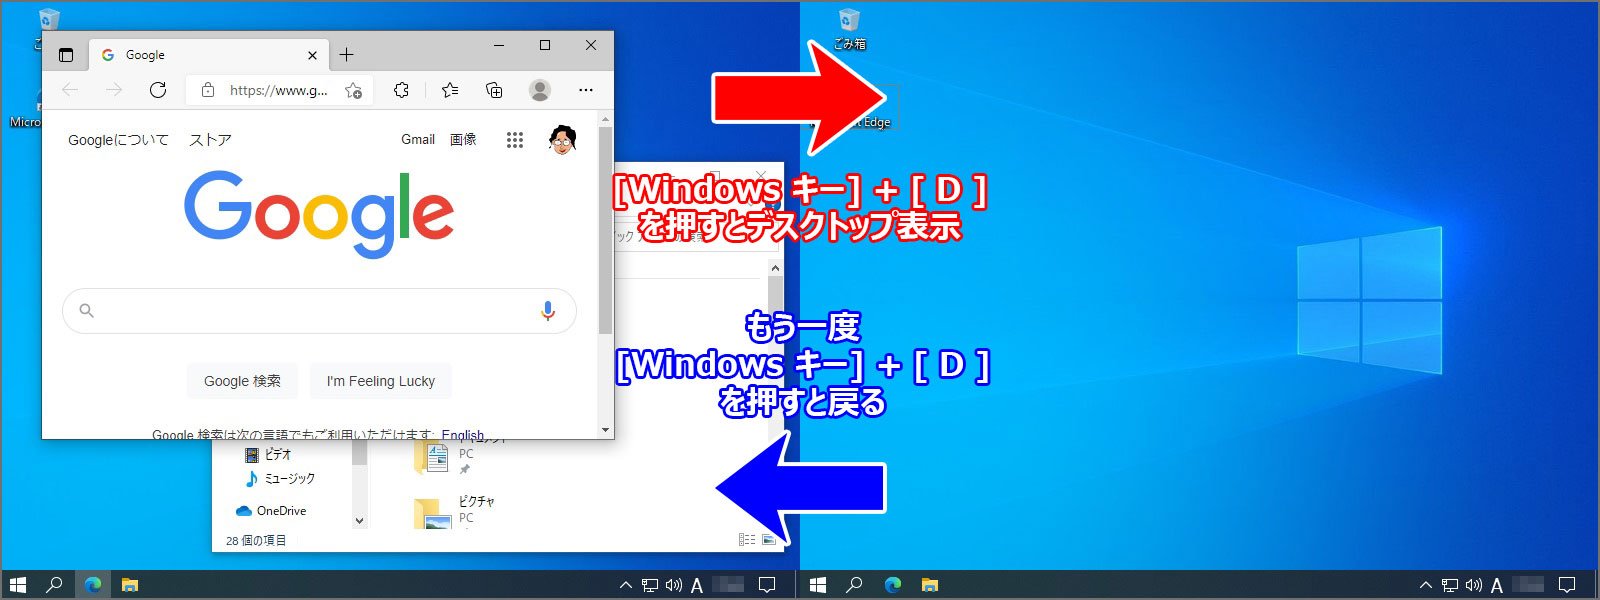 [Windows キー] + [ D ] / 『デスクトップ』表示